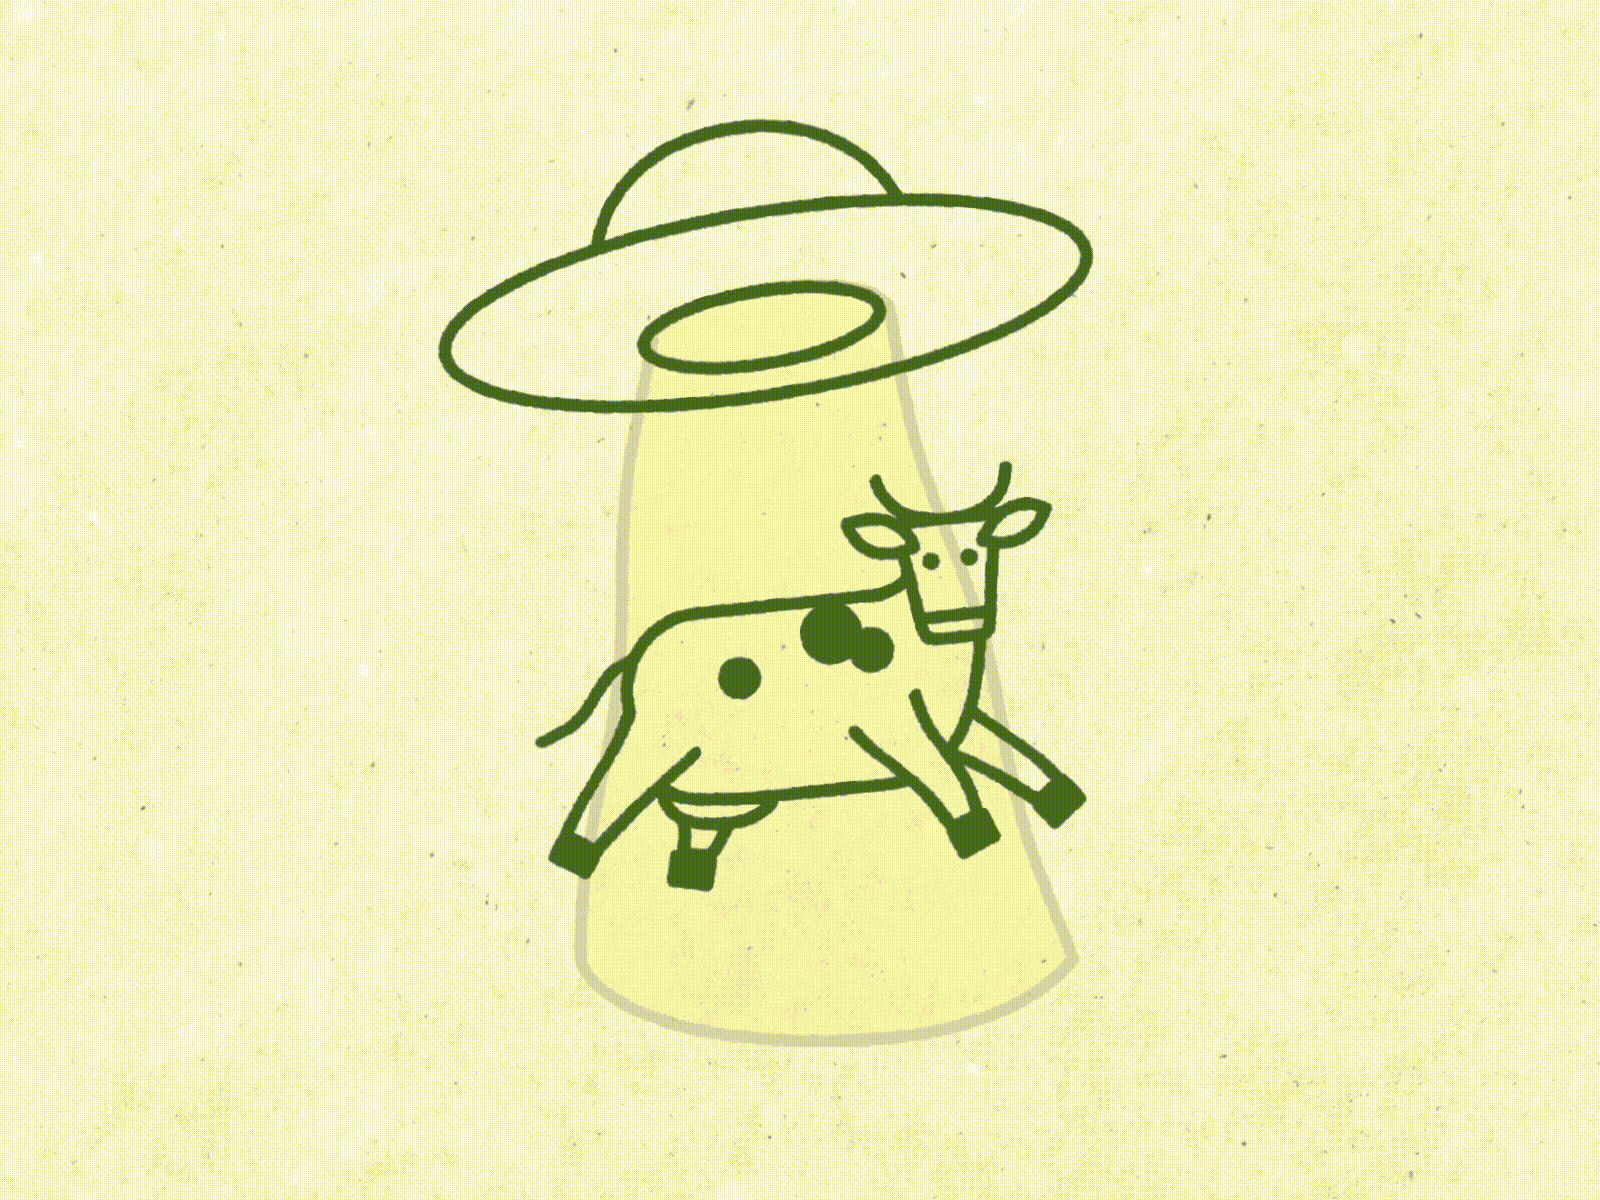 Cute Cow Head Farm Animal Character with Black Outline in Animated Cartoon  Vector Illustration 16084975 Vector Art at Vecteezy